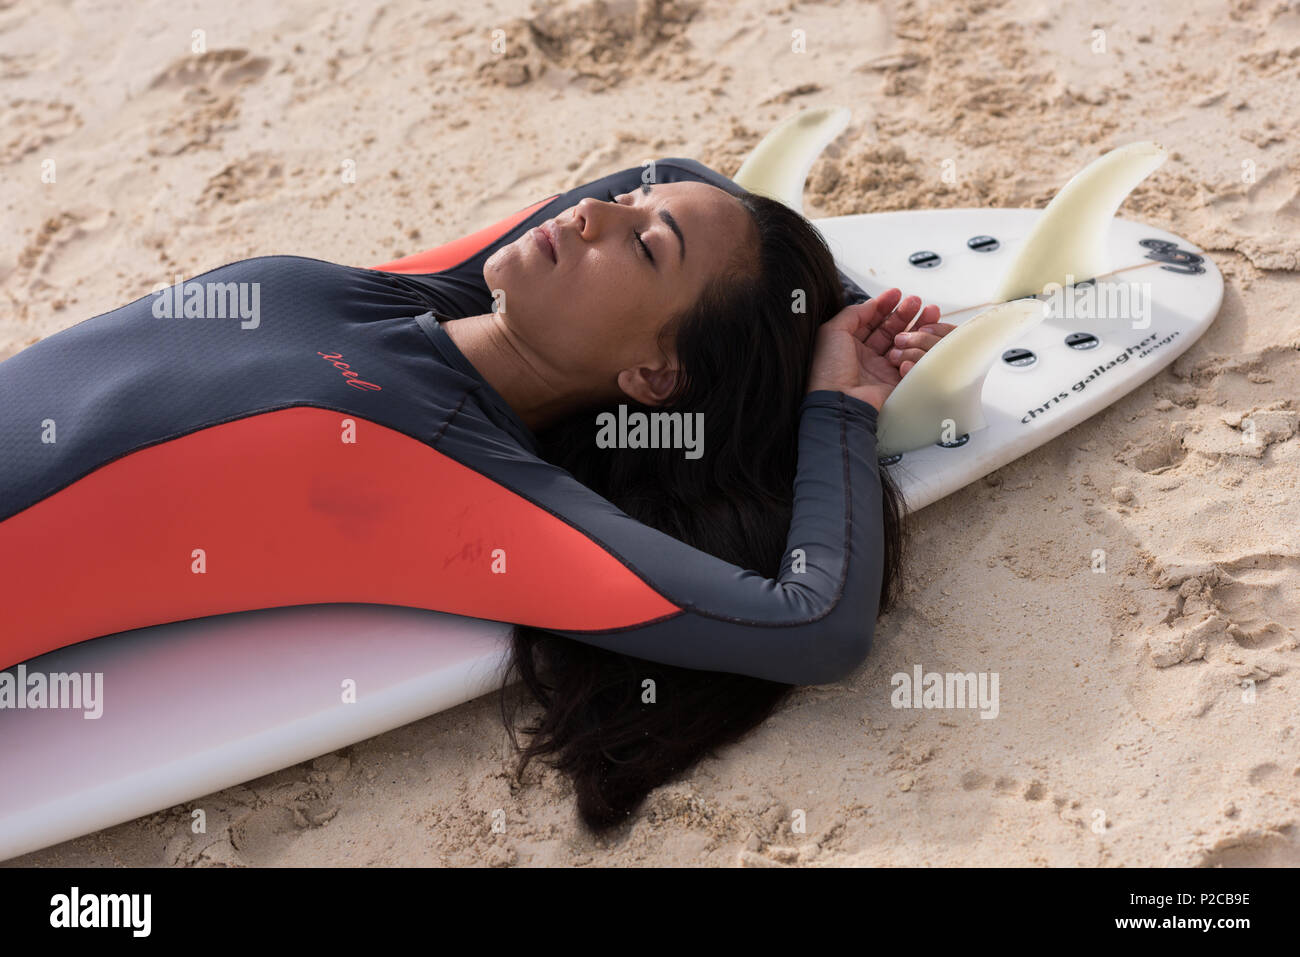 Woman sleeping on surfboard in the beach Stock Photo